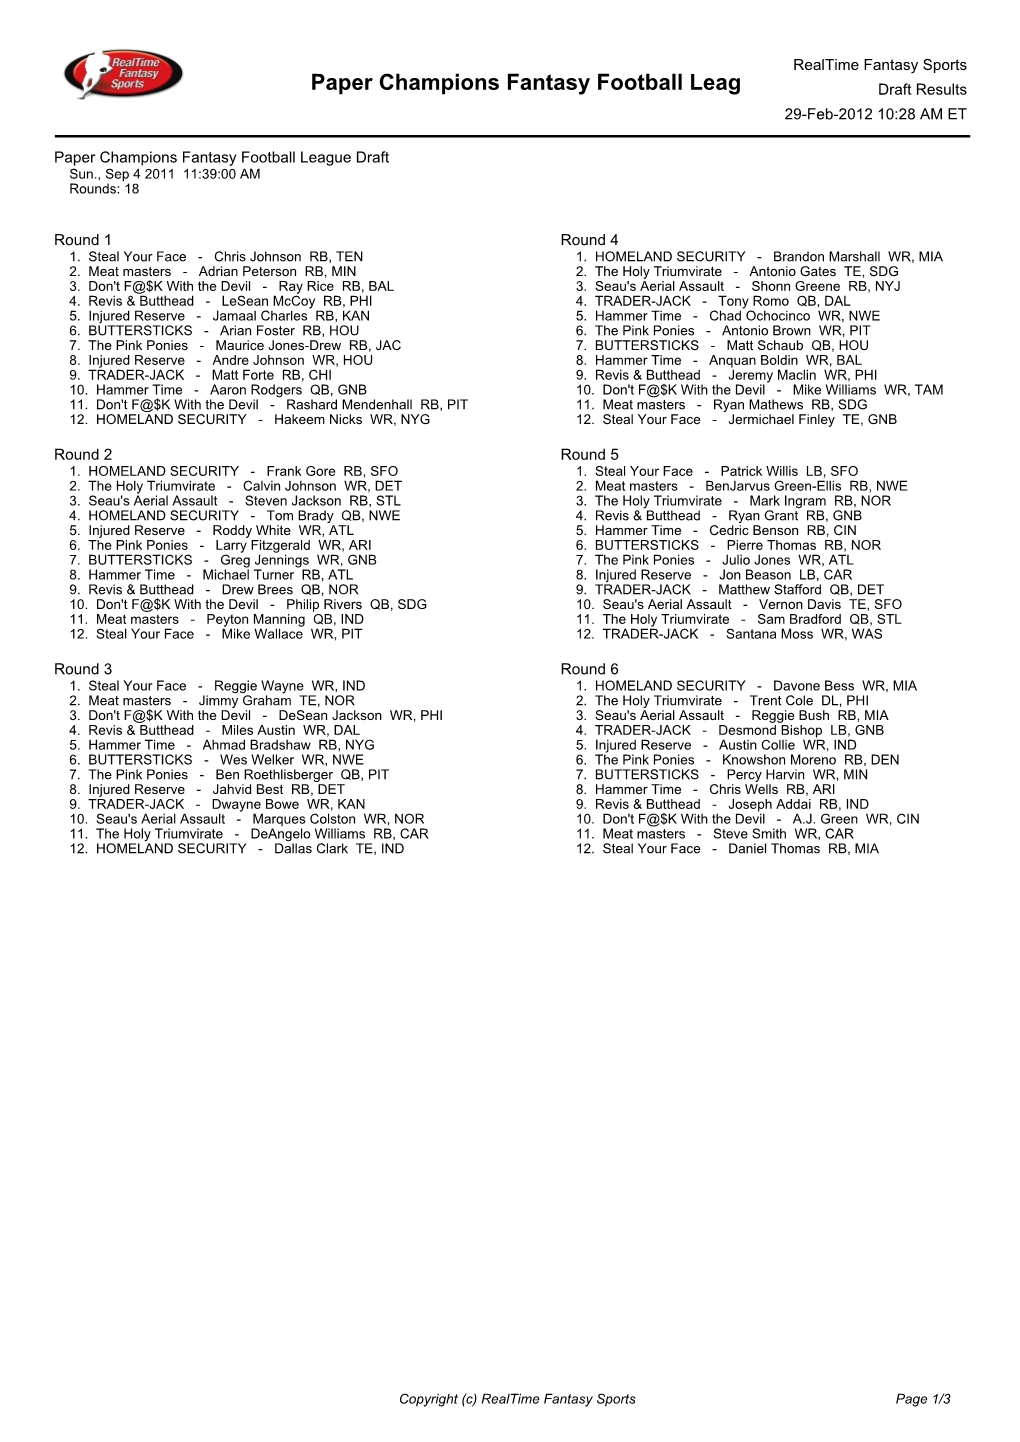 Paper Champions Fantasy Football Leag Draft Results 29-Feb-2012 10:28 AM ET